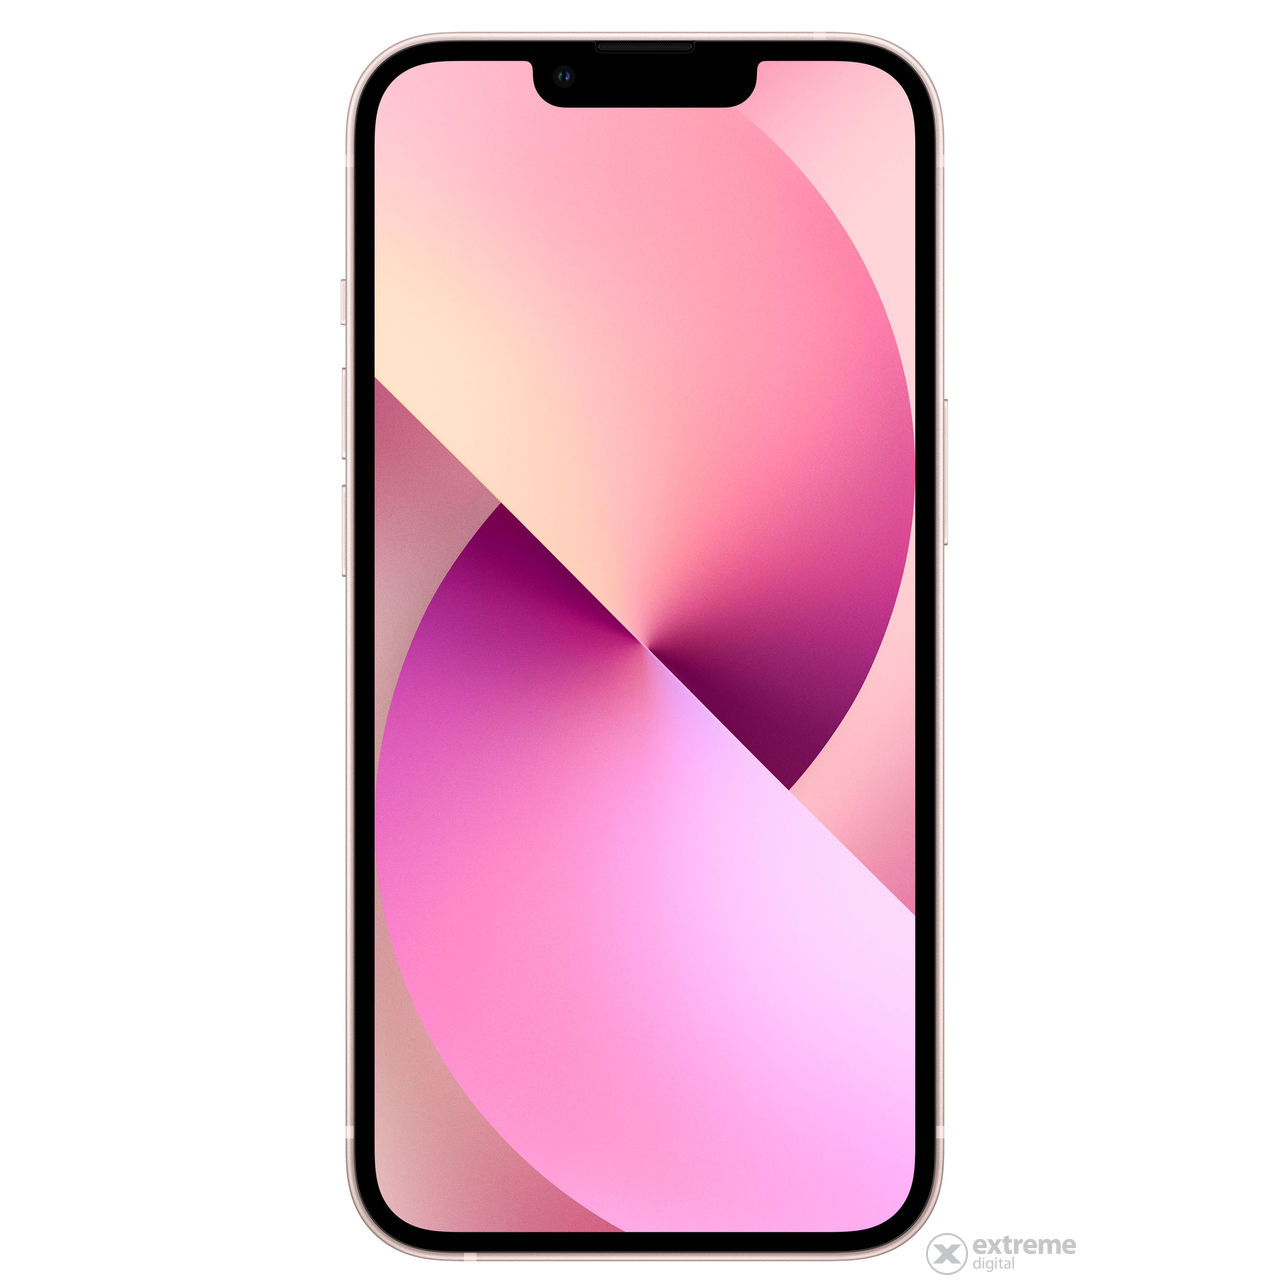 Apple iPhone 13 512GB (mlqe3hu/a), pink